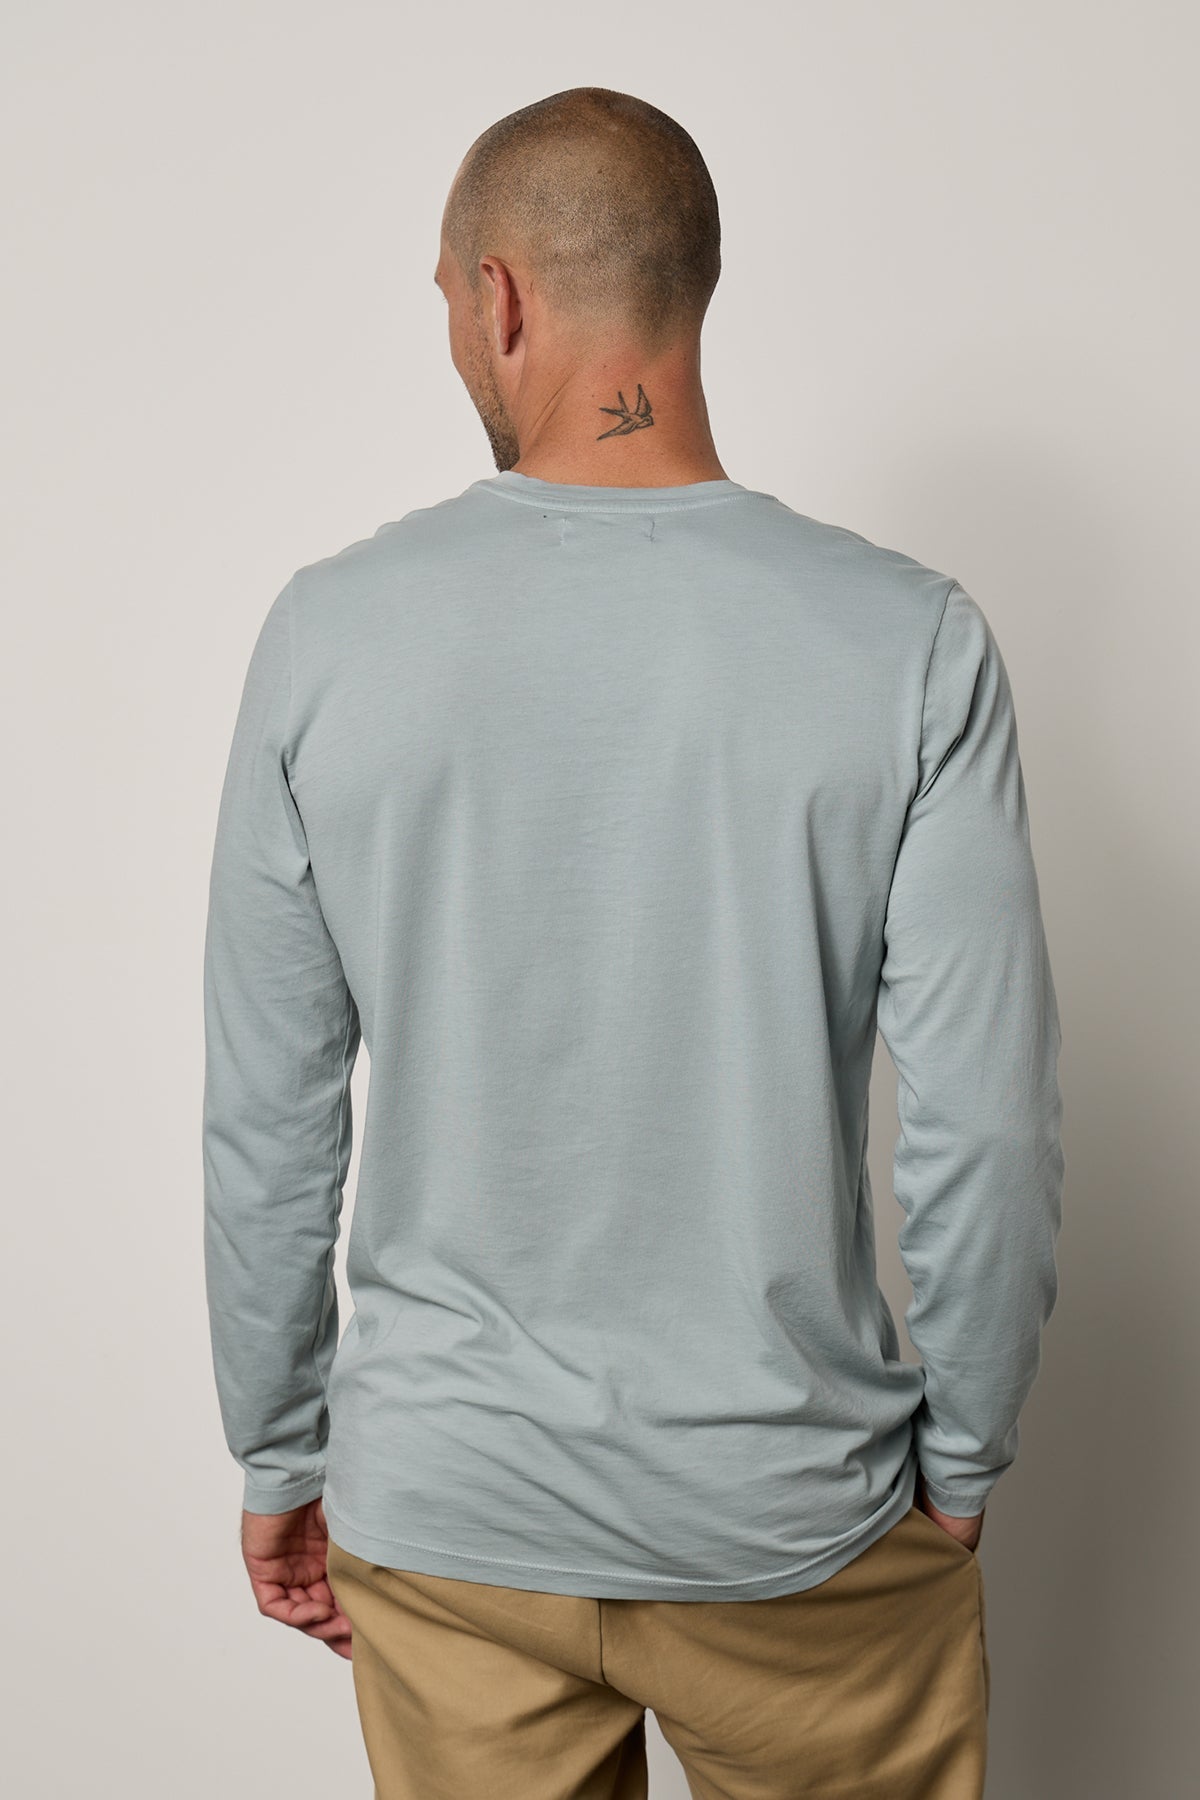 the back view of a man wearing a Velvet by Graham & Spencer SKEETER WHISPER CLASSIC CREW NECK TEE.-26632207368385